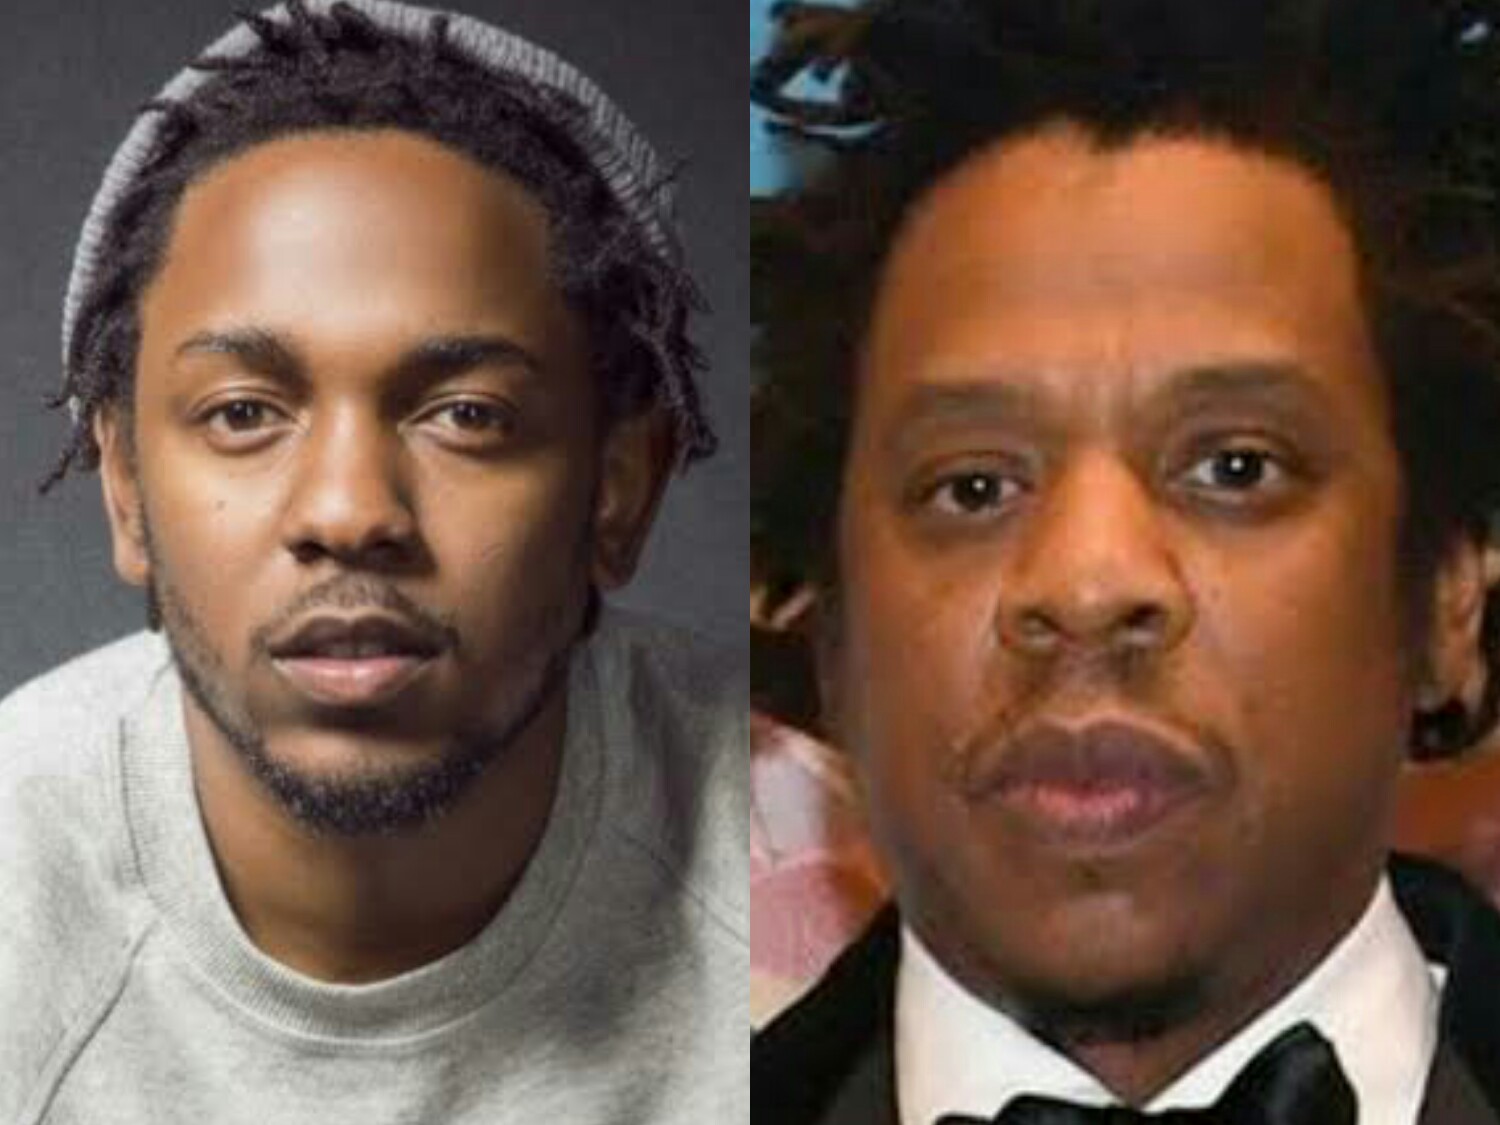 Hit-Boy Targets Producing Kendrick Lamar and Jay-Z Album